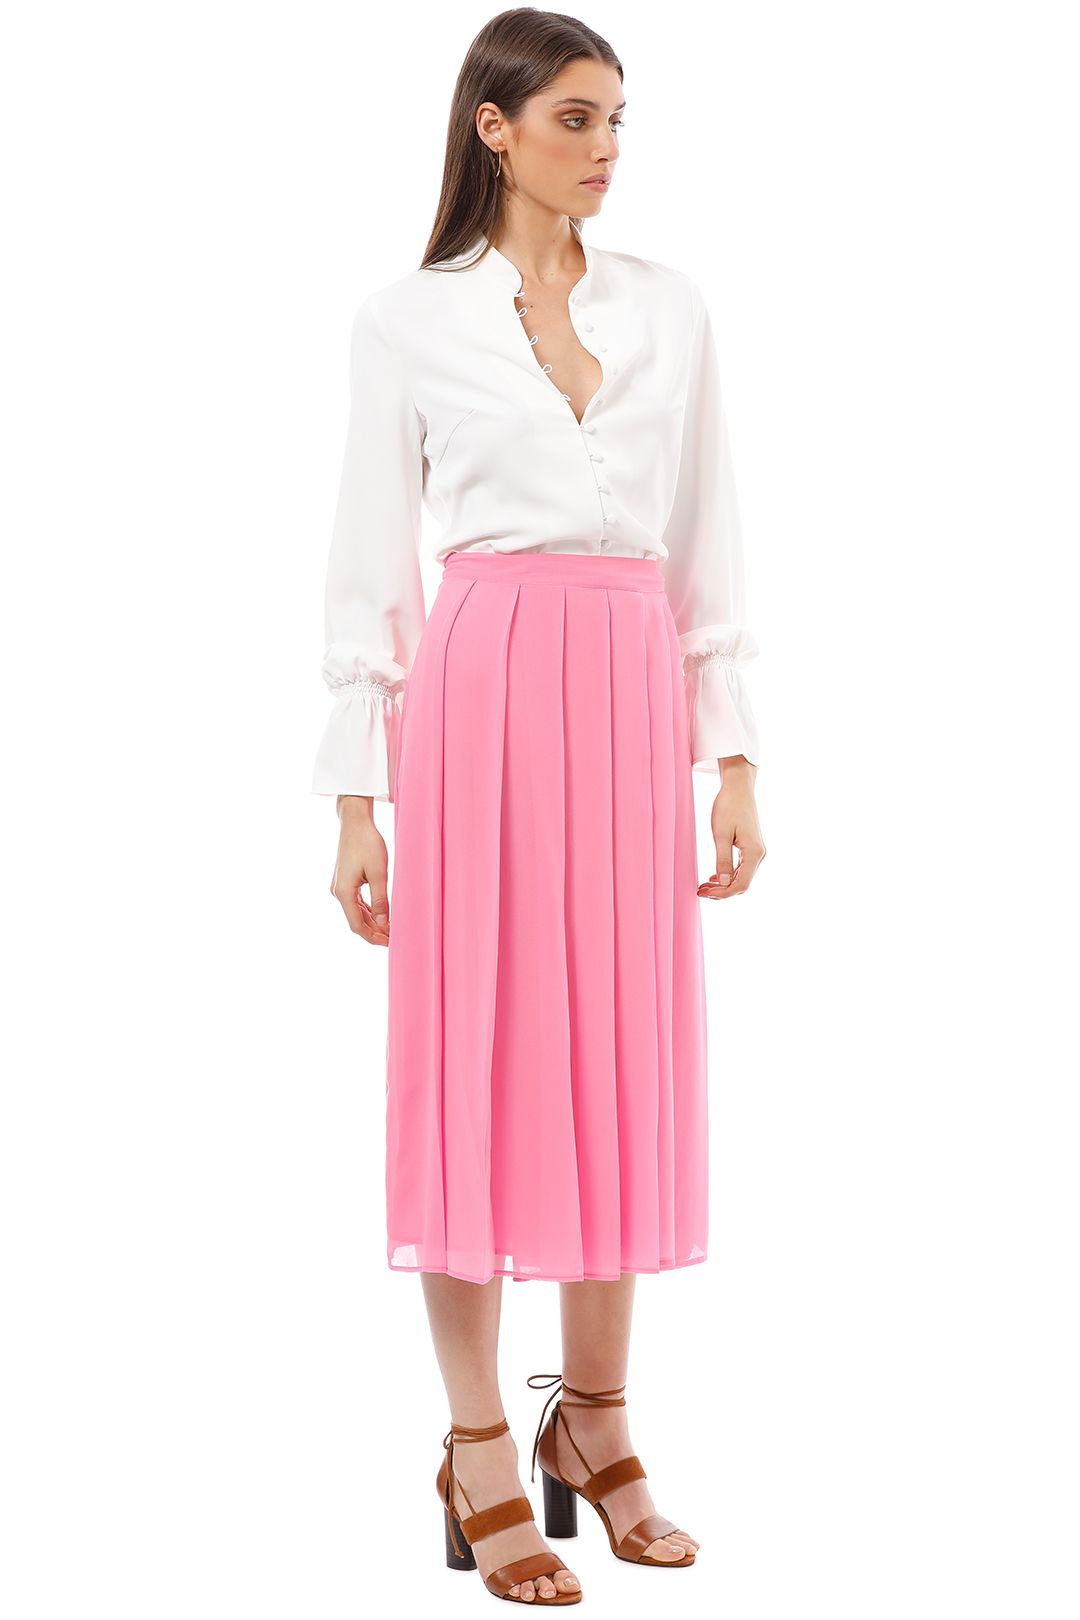 Closet London - Pleated Skirt - Pink - Side